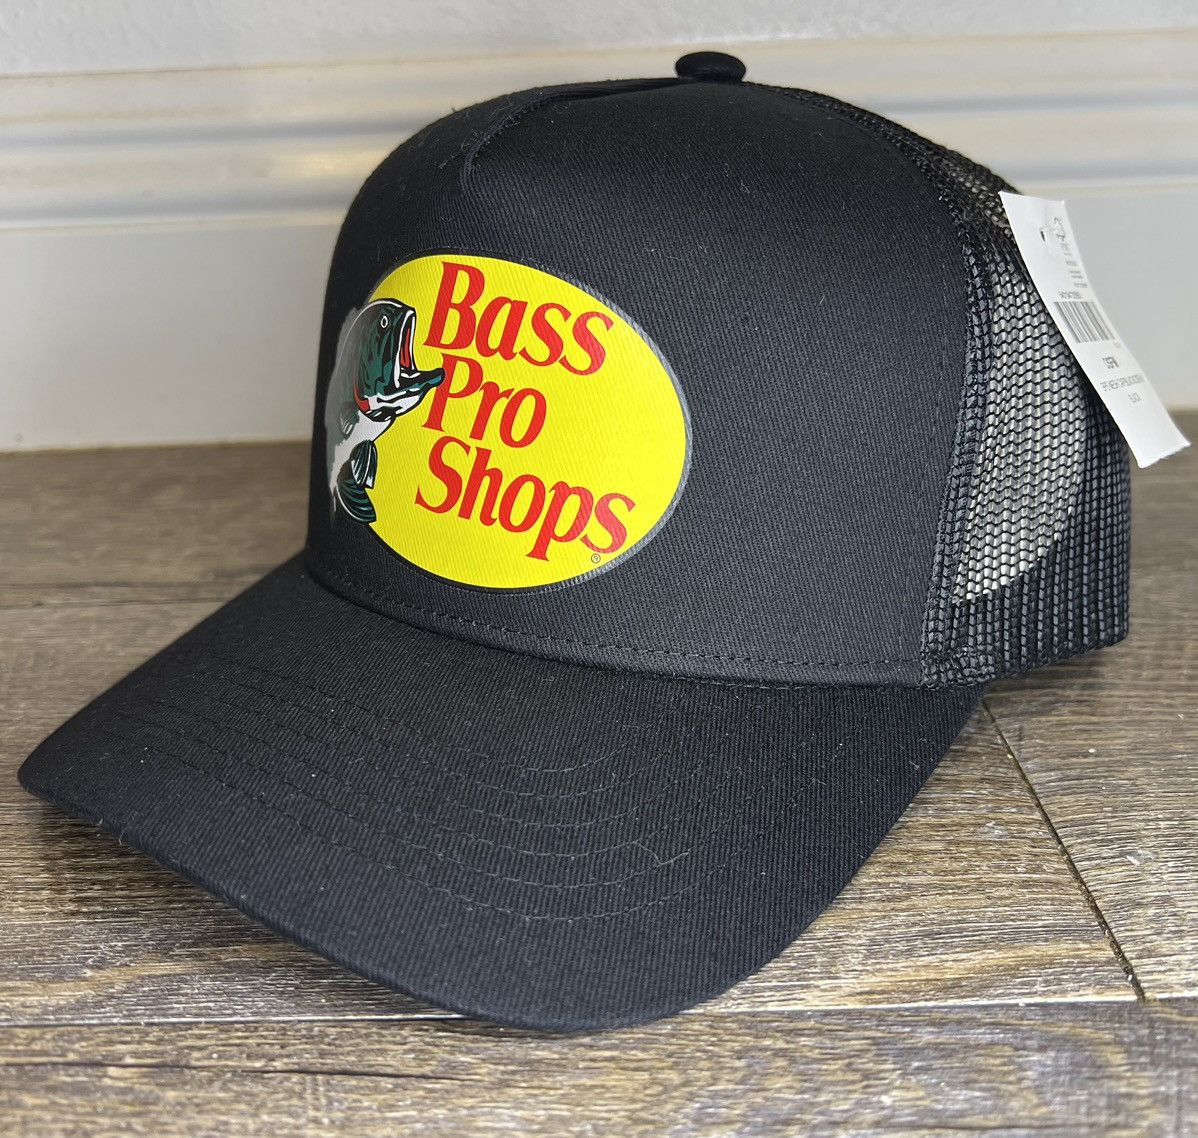 Bass Pro Shops Bass Pro Shops Black Trucker Hat